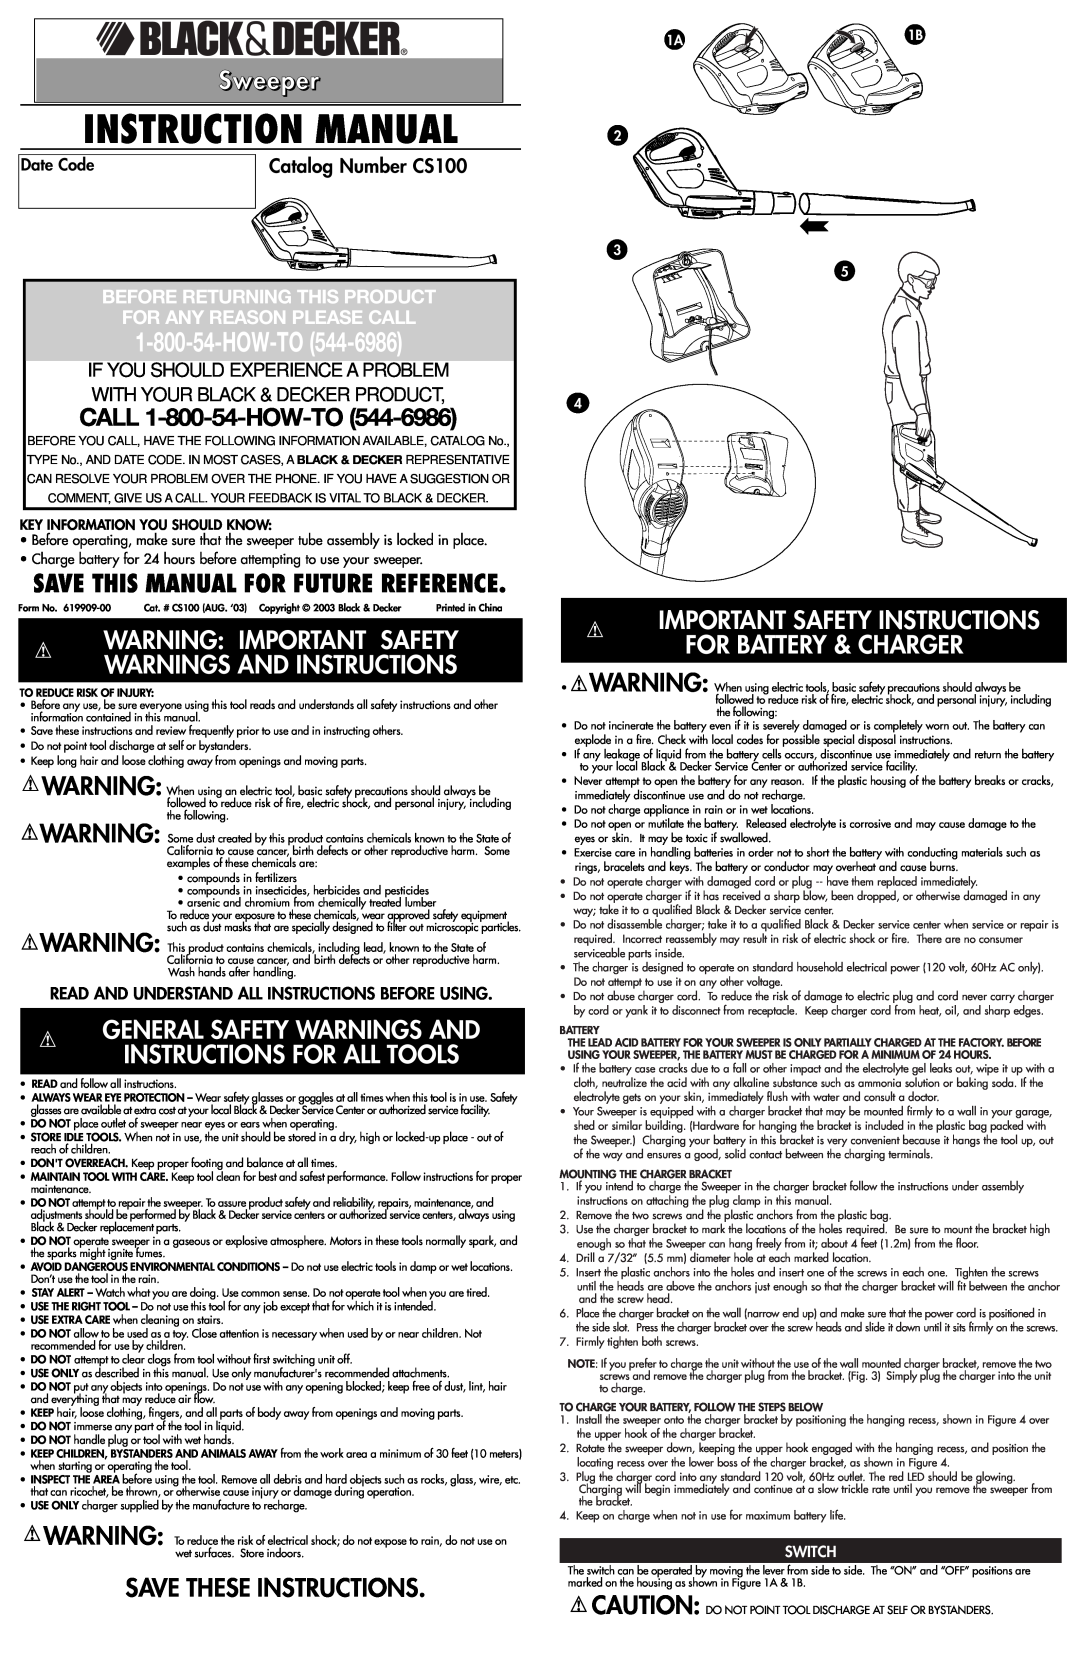 Black & Decker CS100 instruction manual Instruction Manual, How-To, call 1-800-54-HOW-TO, Save These Instructions, Sweeper 